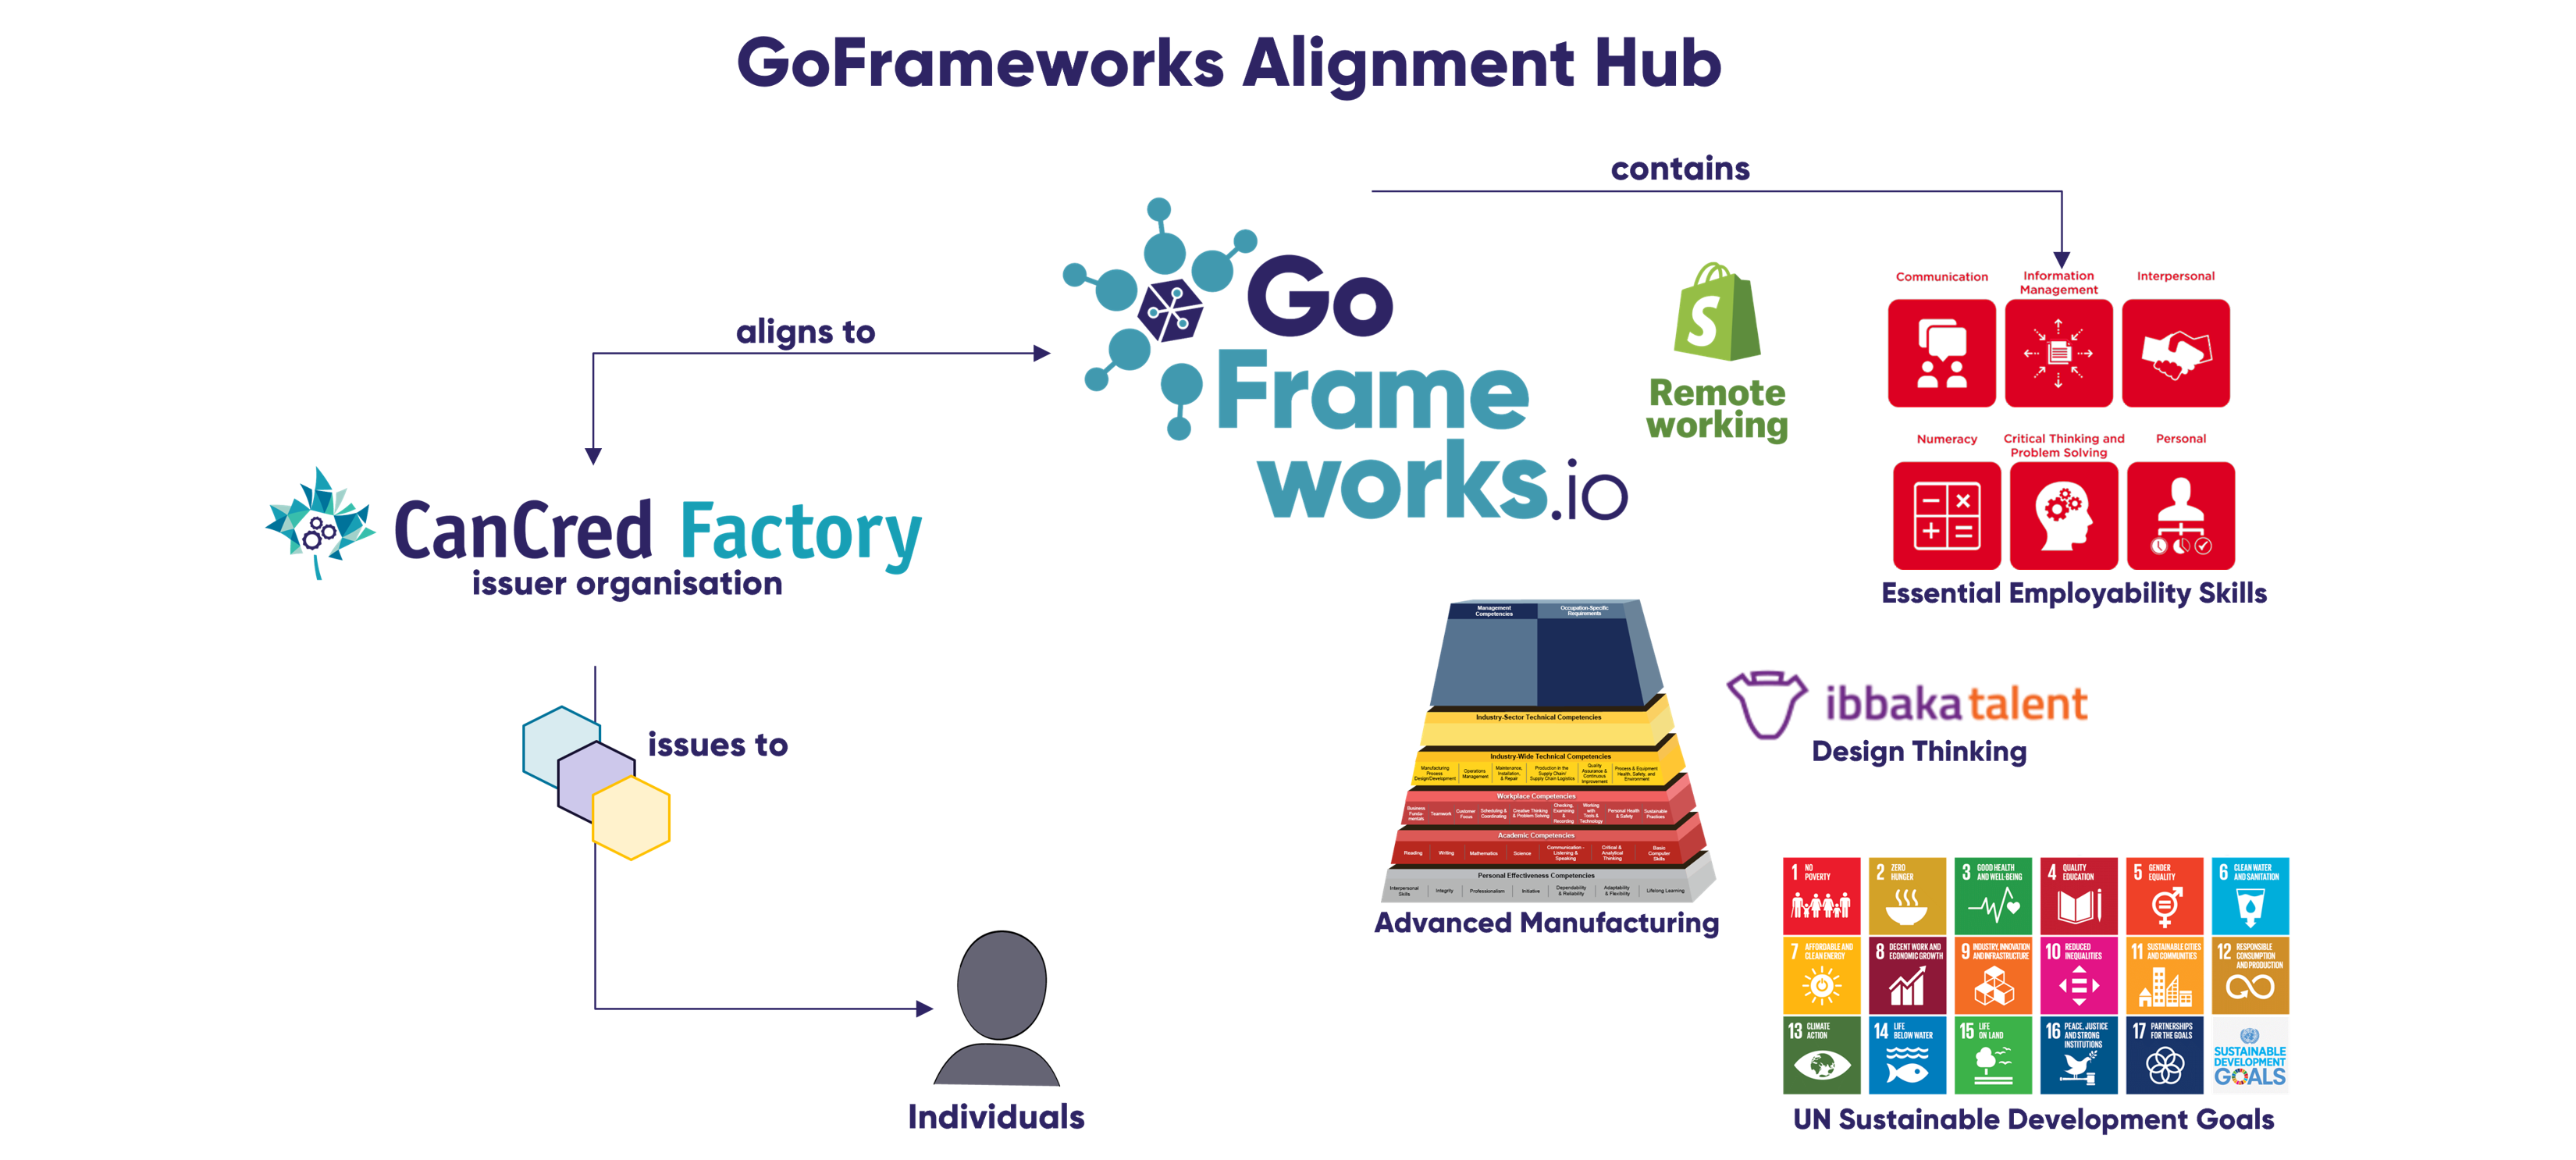 CanCred partners with Ibbaka to launch GoFrameworks alignment hub